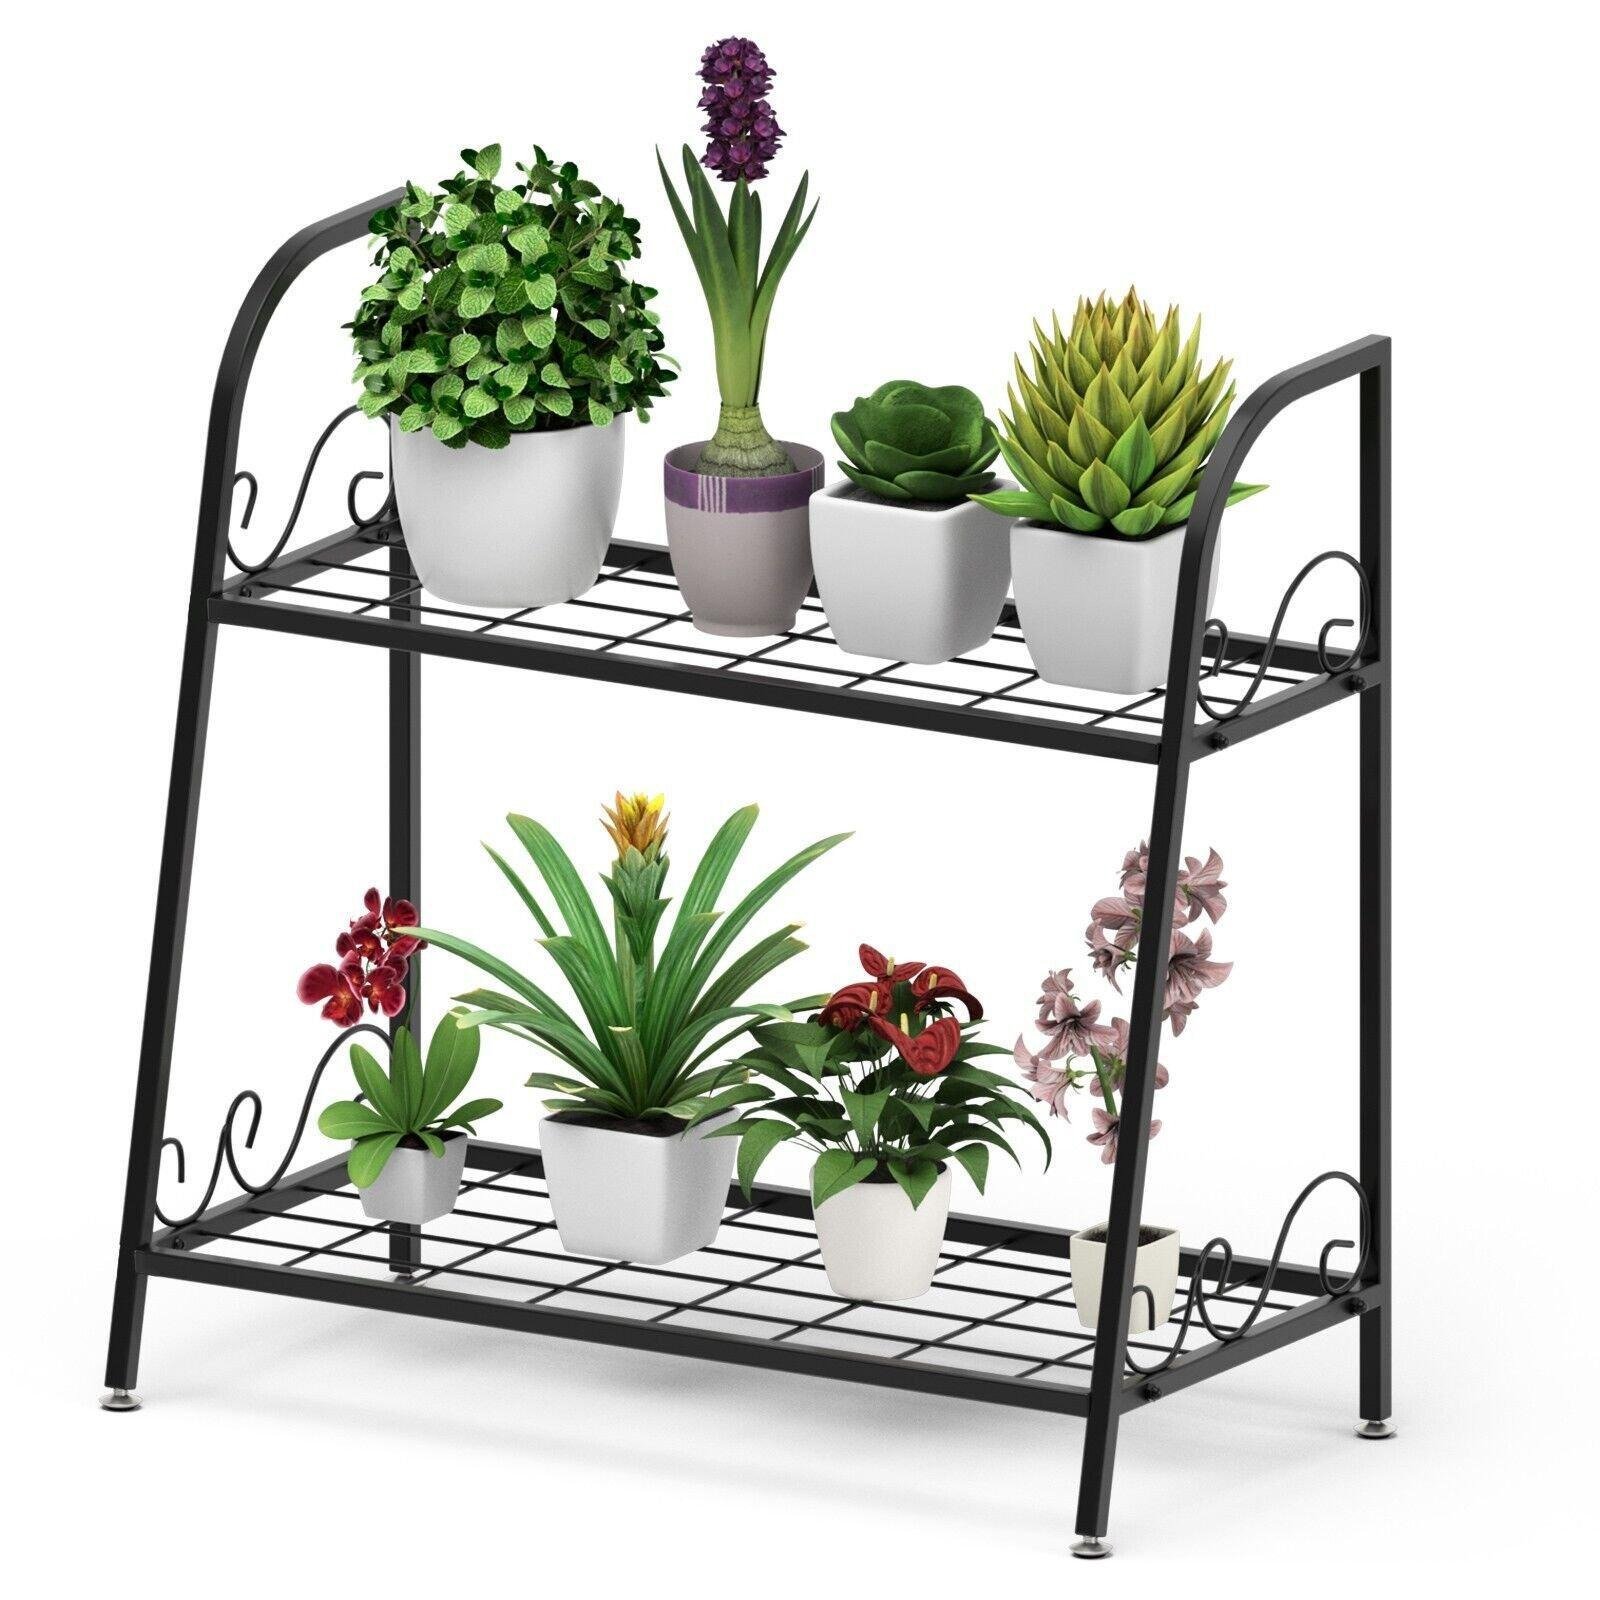 2-tier Metal Plant Stand Shelf Multifunctional Flower Rack Display Pot Holder - image 1